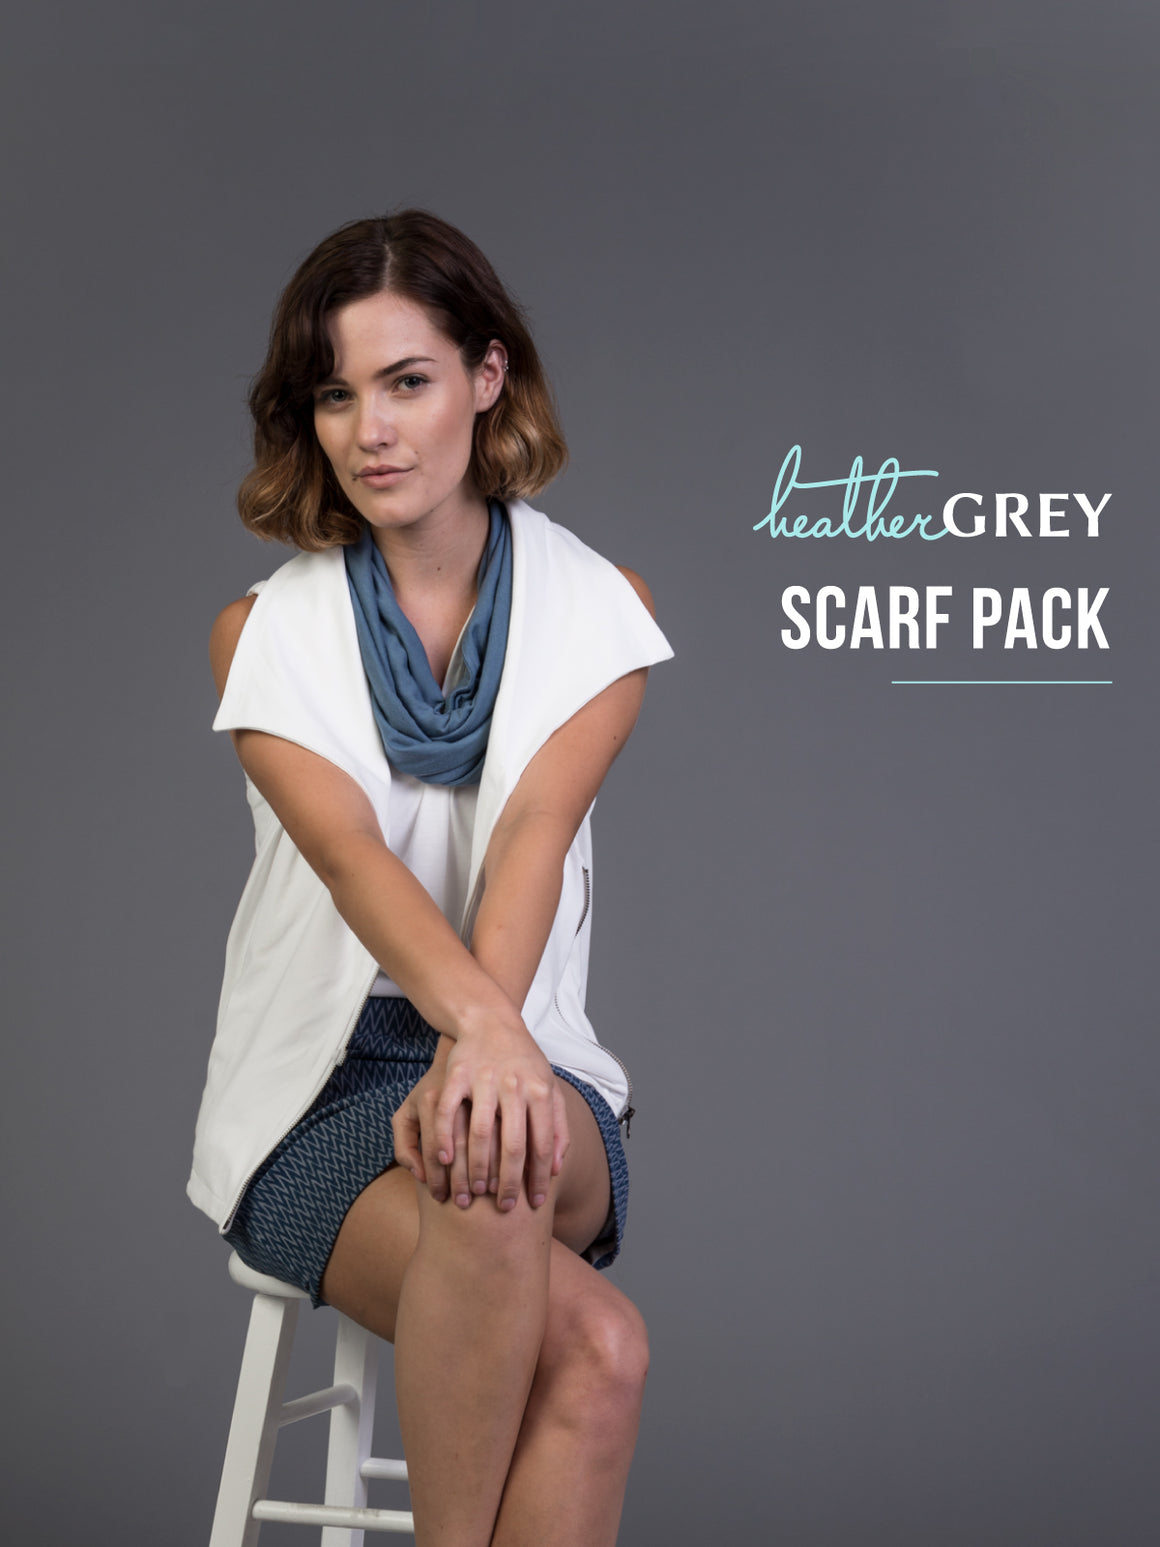 Heather Grey Scarf Sample Pack Flash Sale